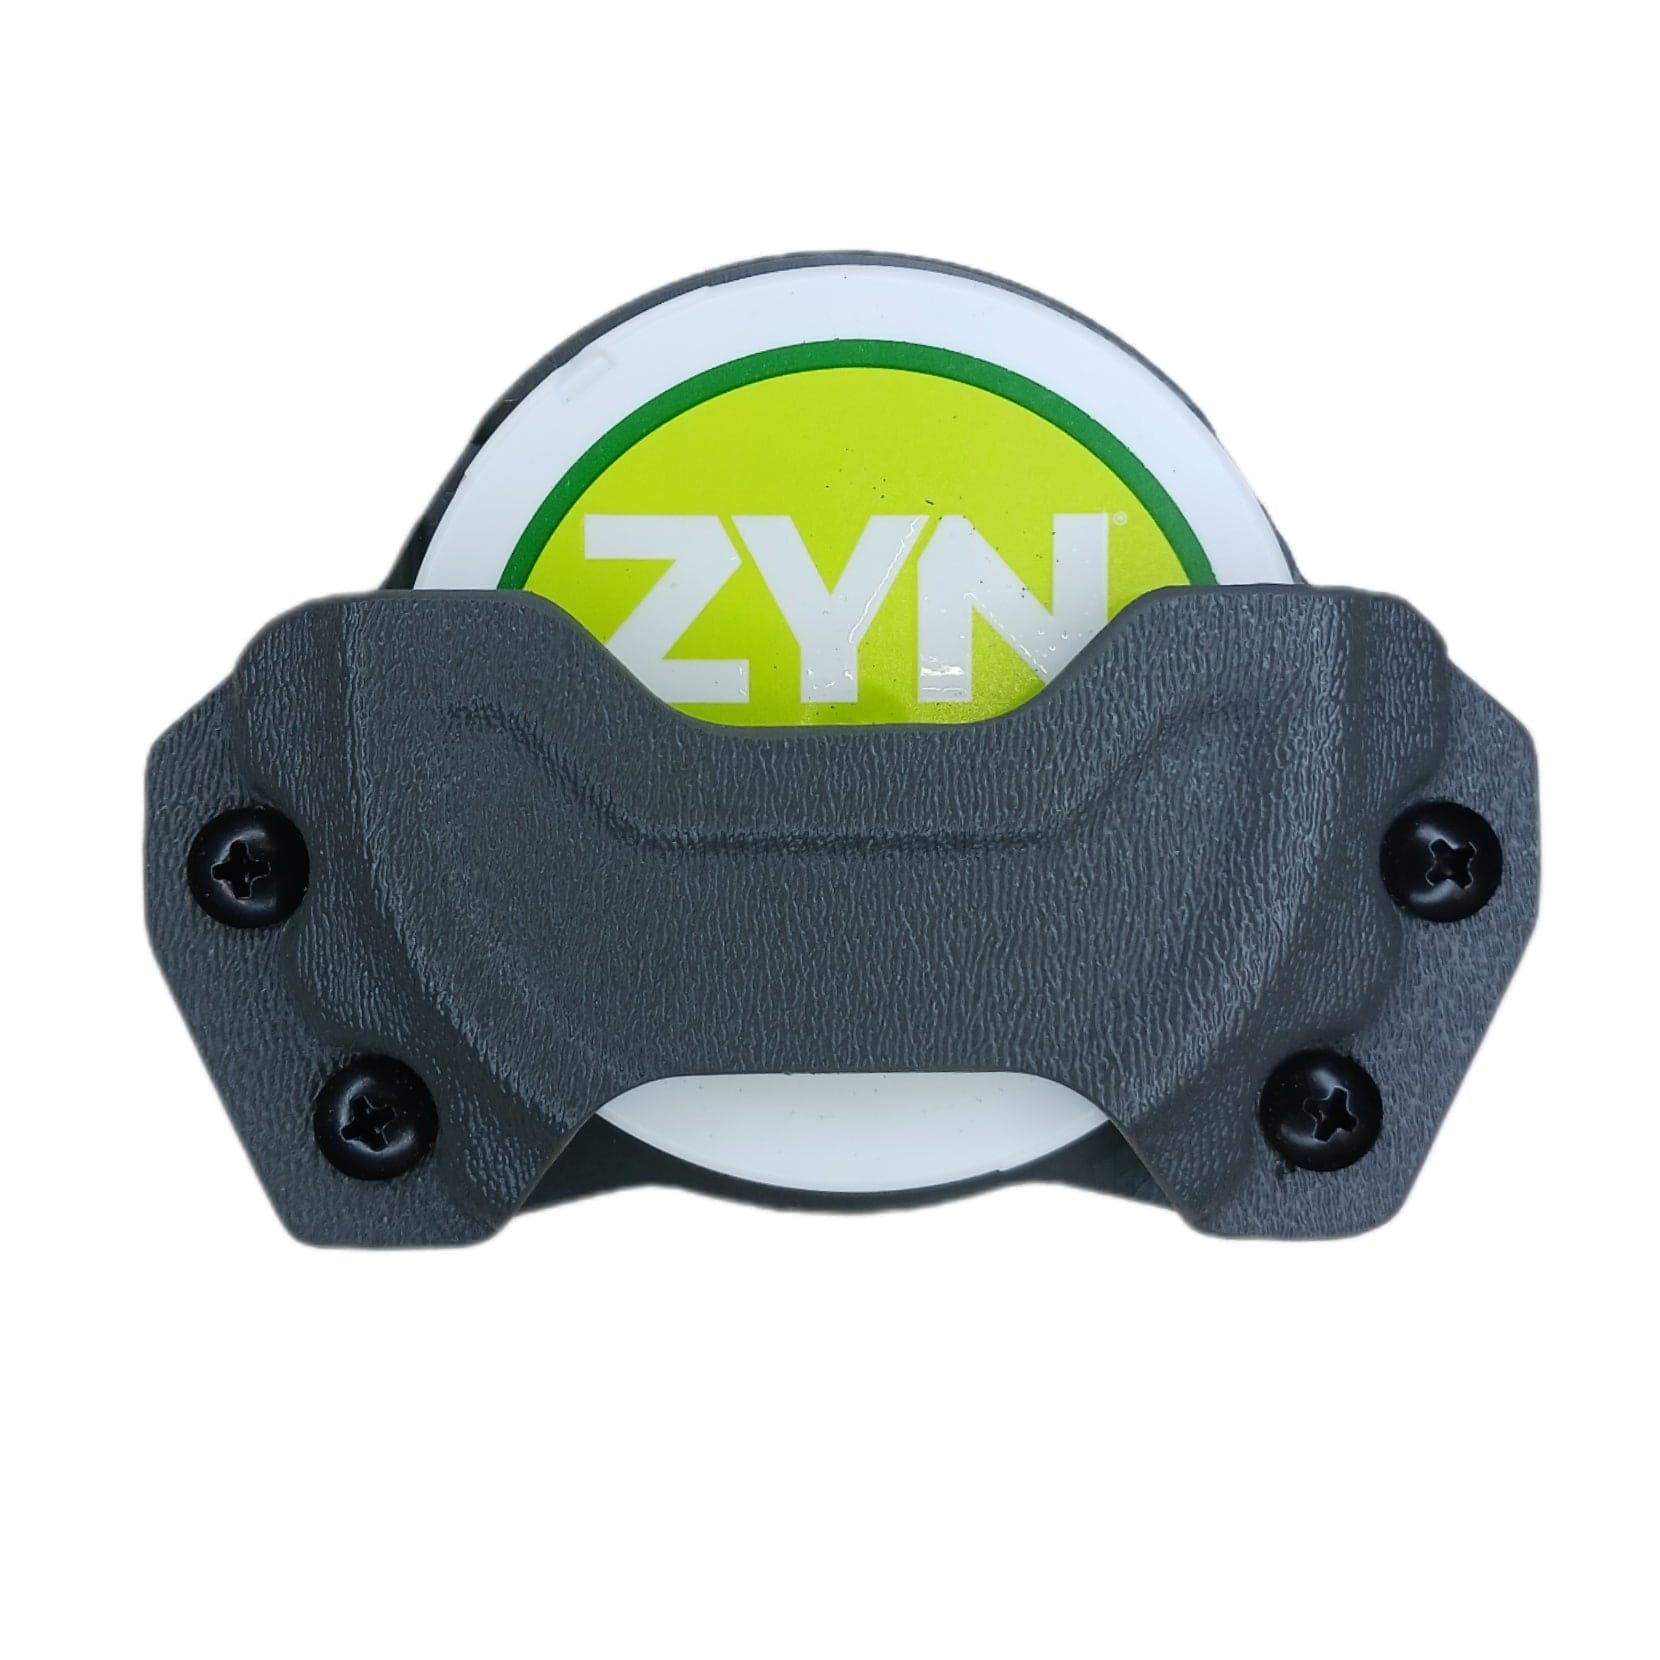 Used zyn holder on zyn cans｜TikTok Search